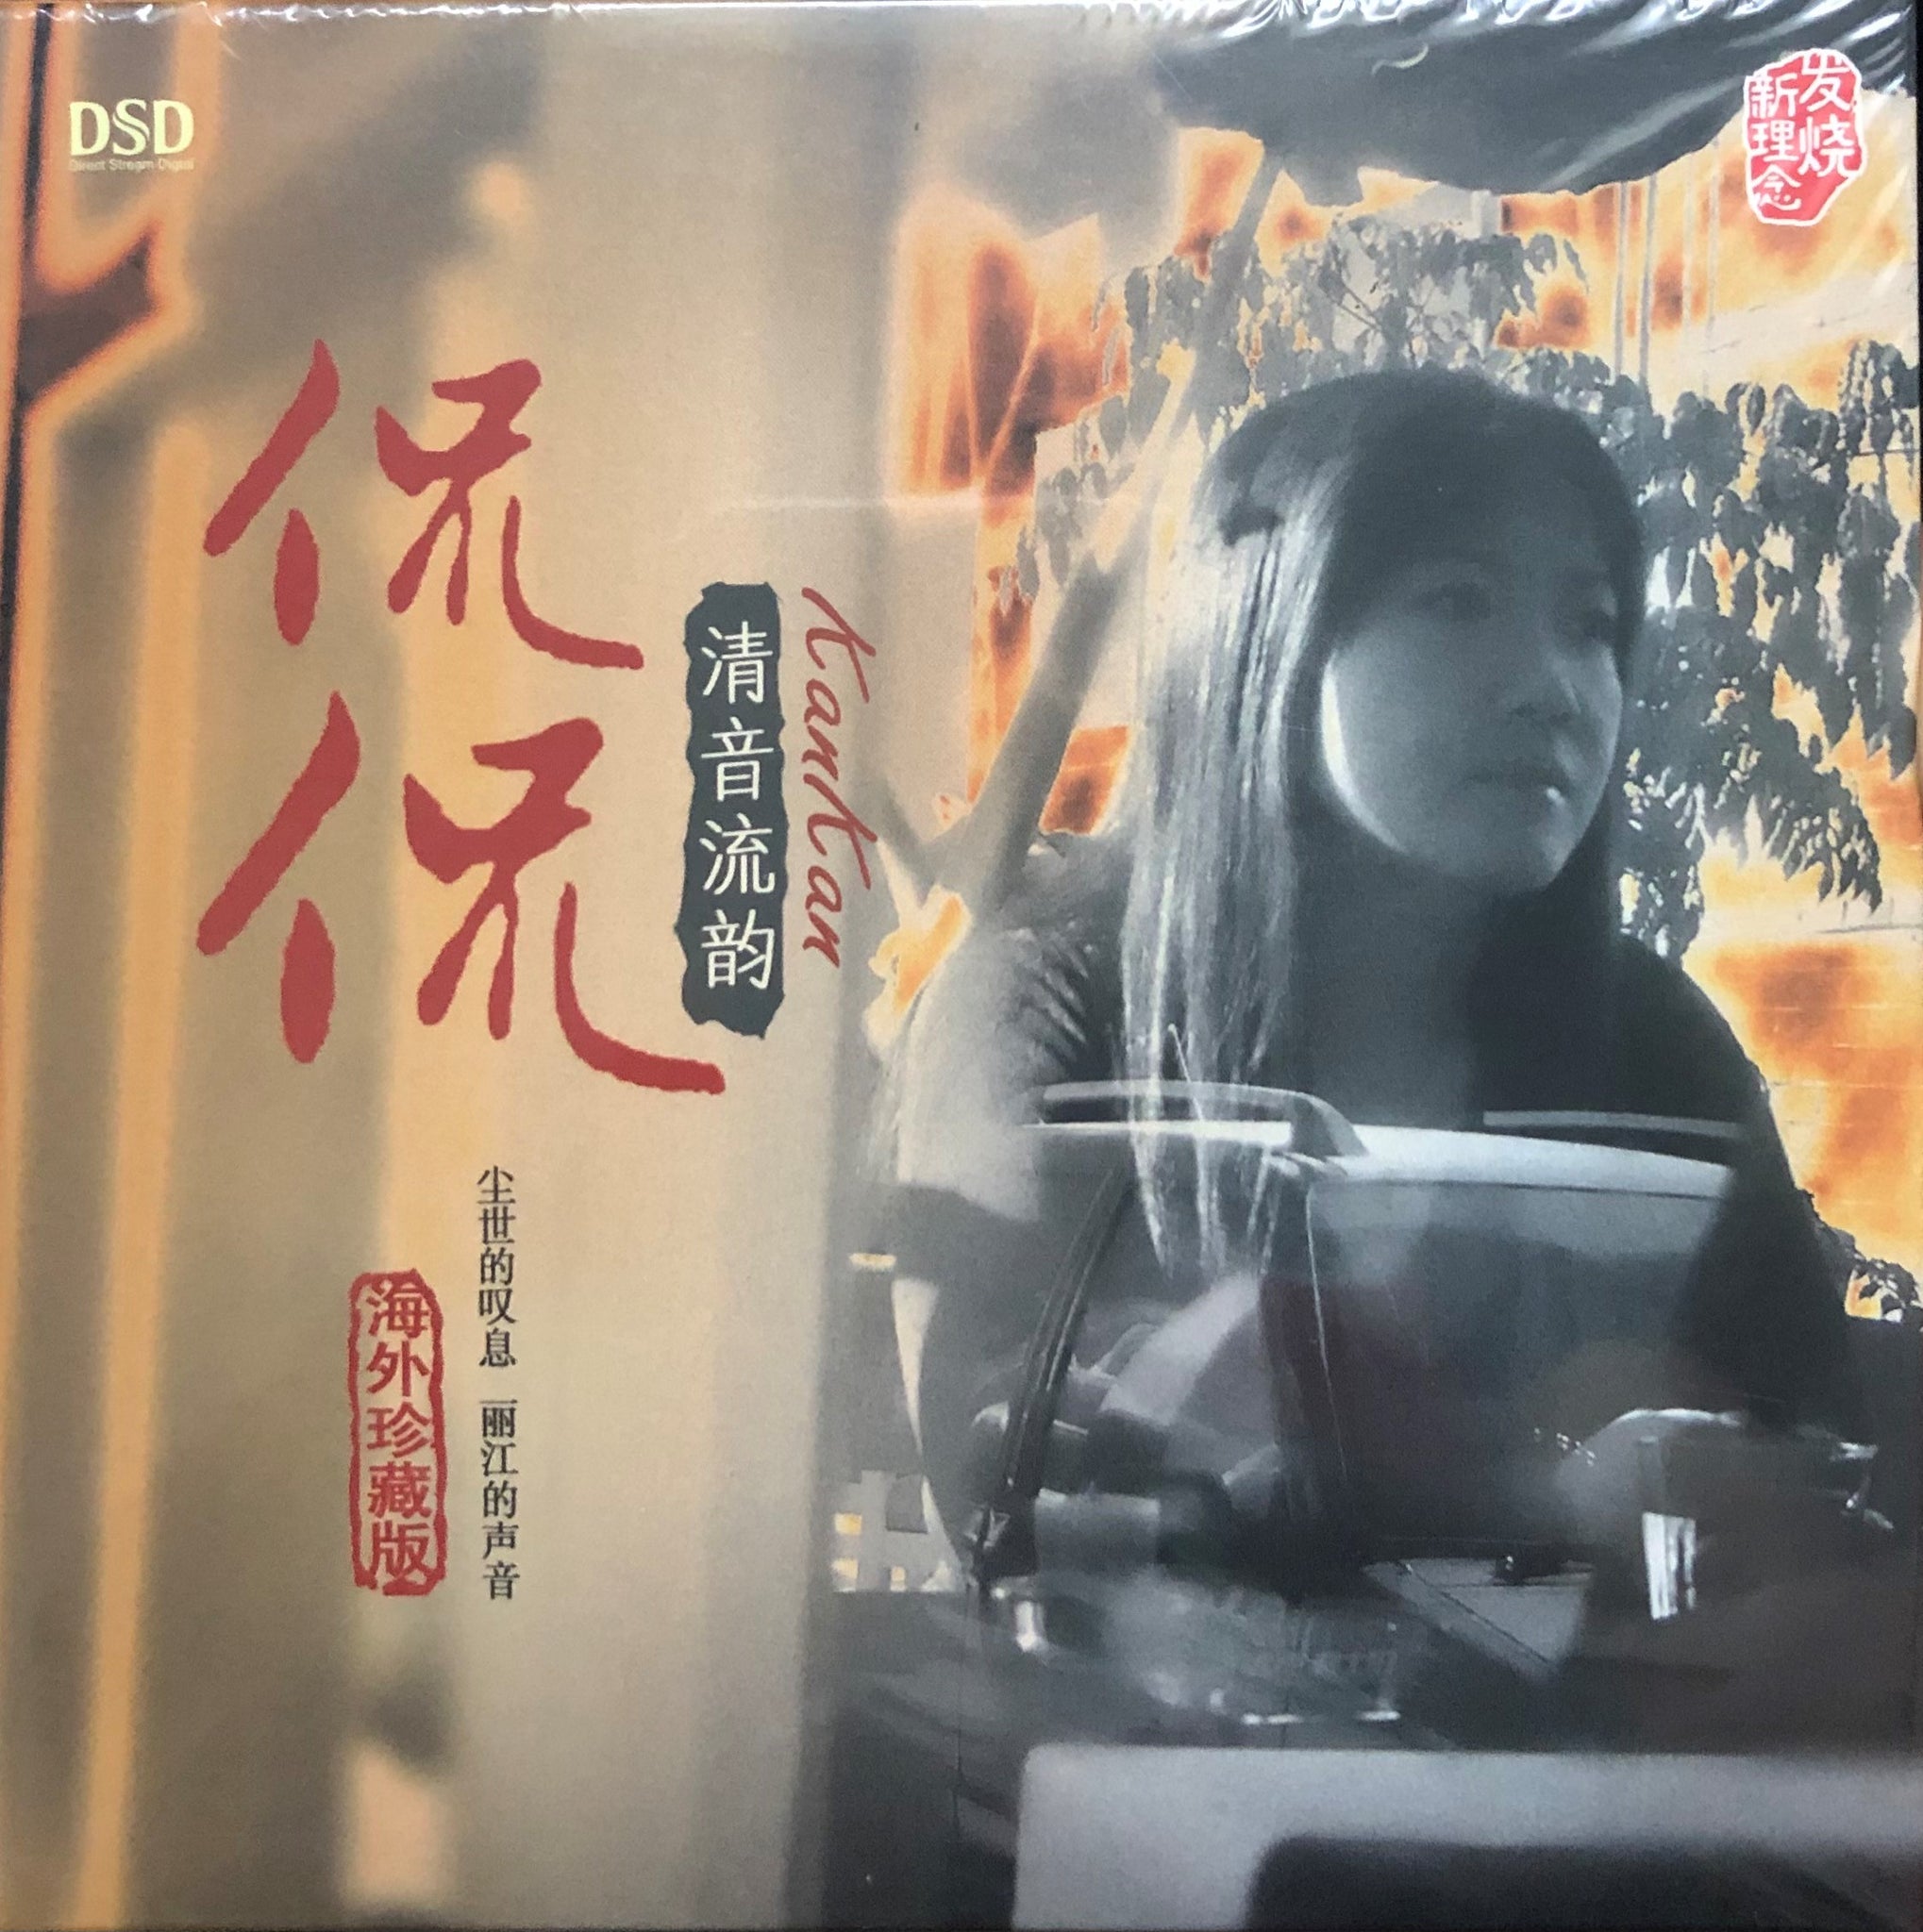 KAN KAN - 侃侃 清音流韻 (CD)